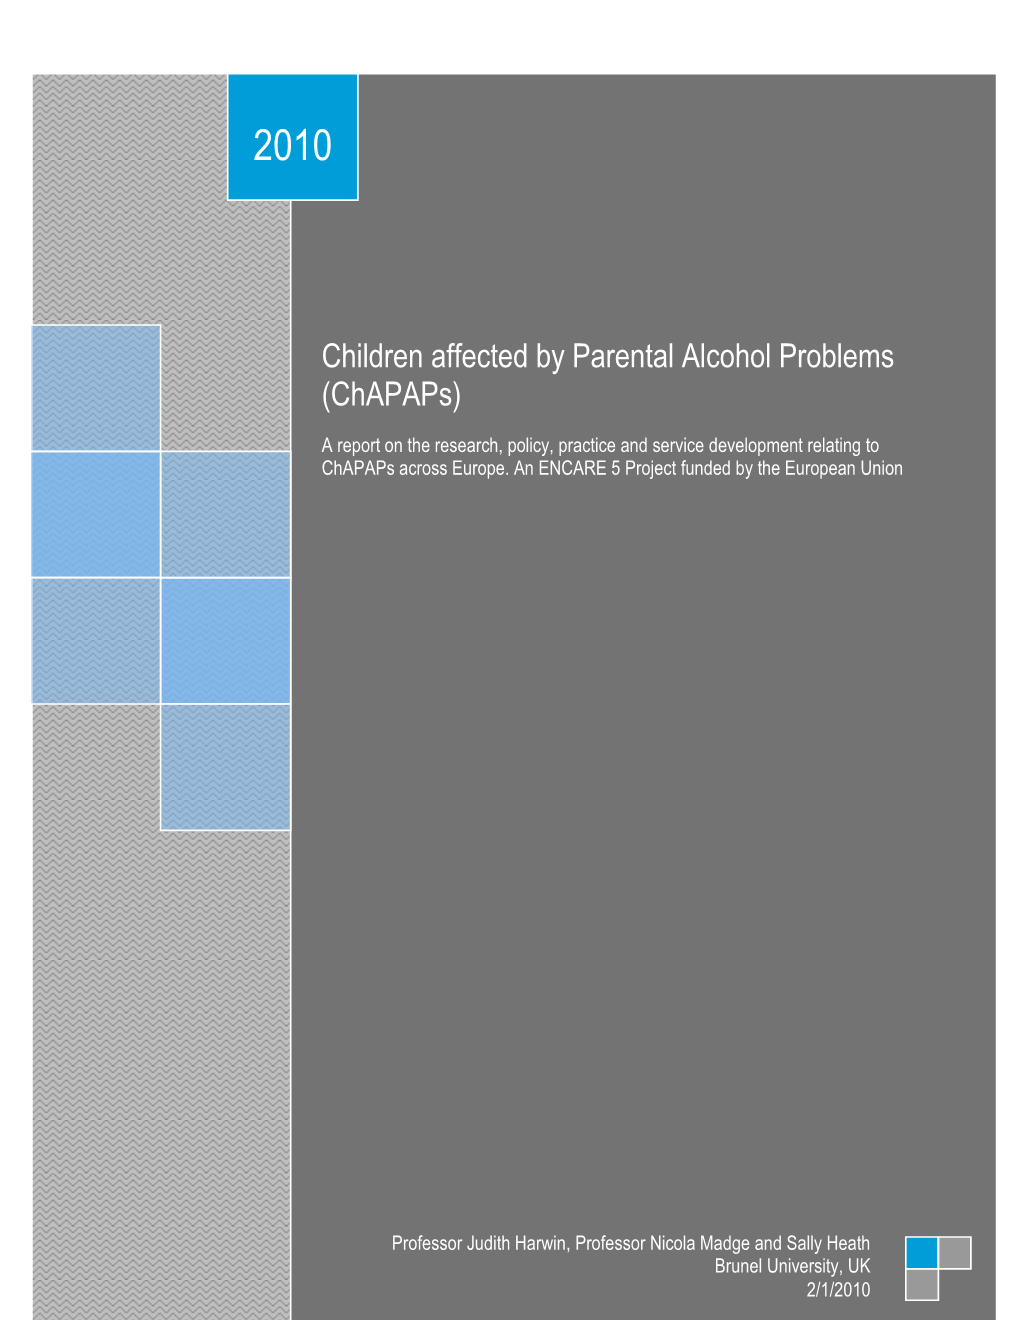 Children Affected by Parental Alcohol Problems (Chapaps)